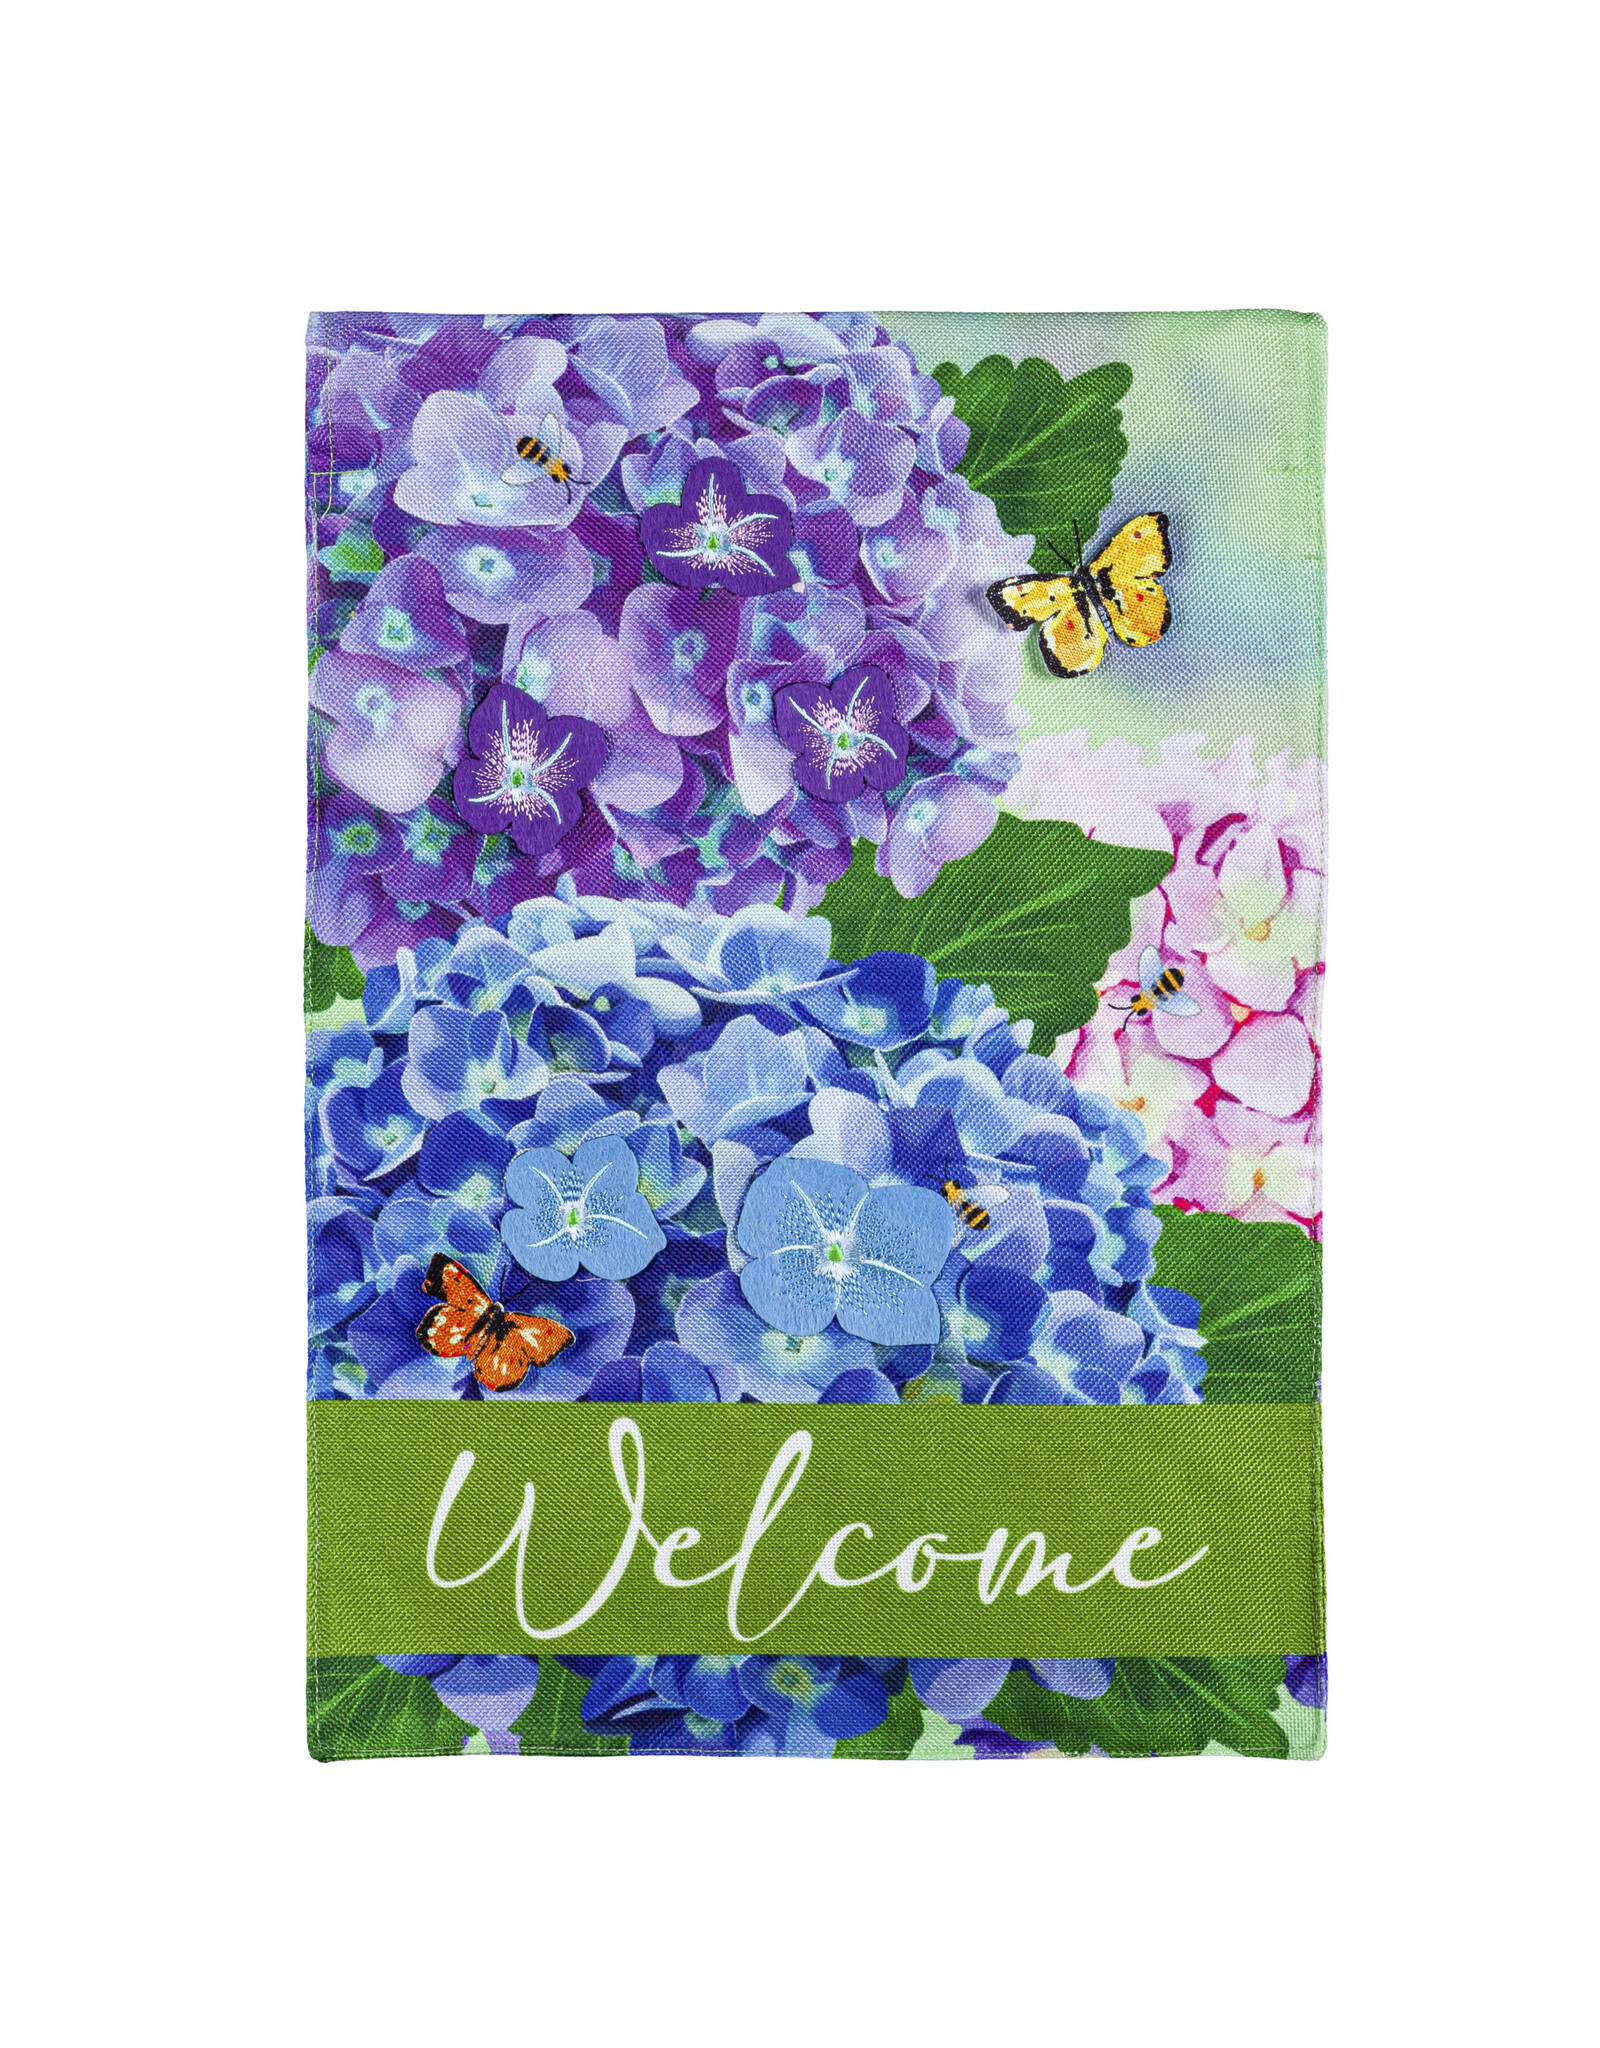 Evergreen Enterprises Hydrangea and Butterfly Welcome Garden Burlap Flag